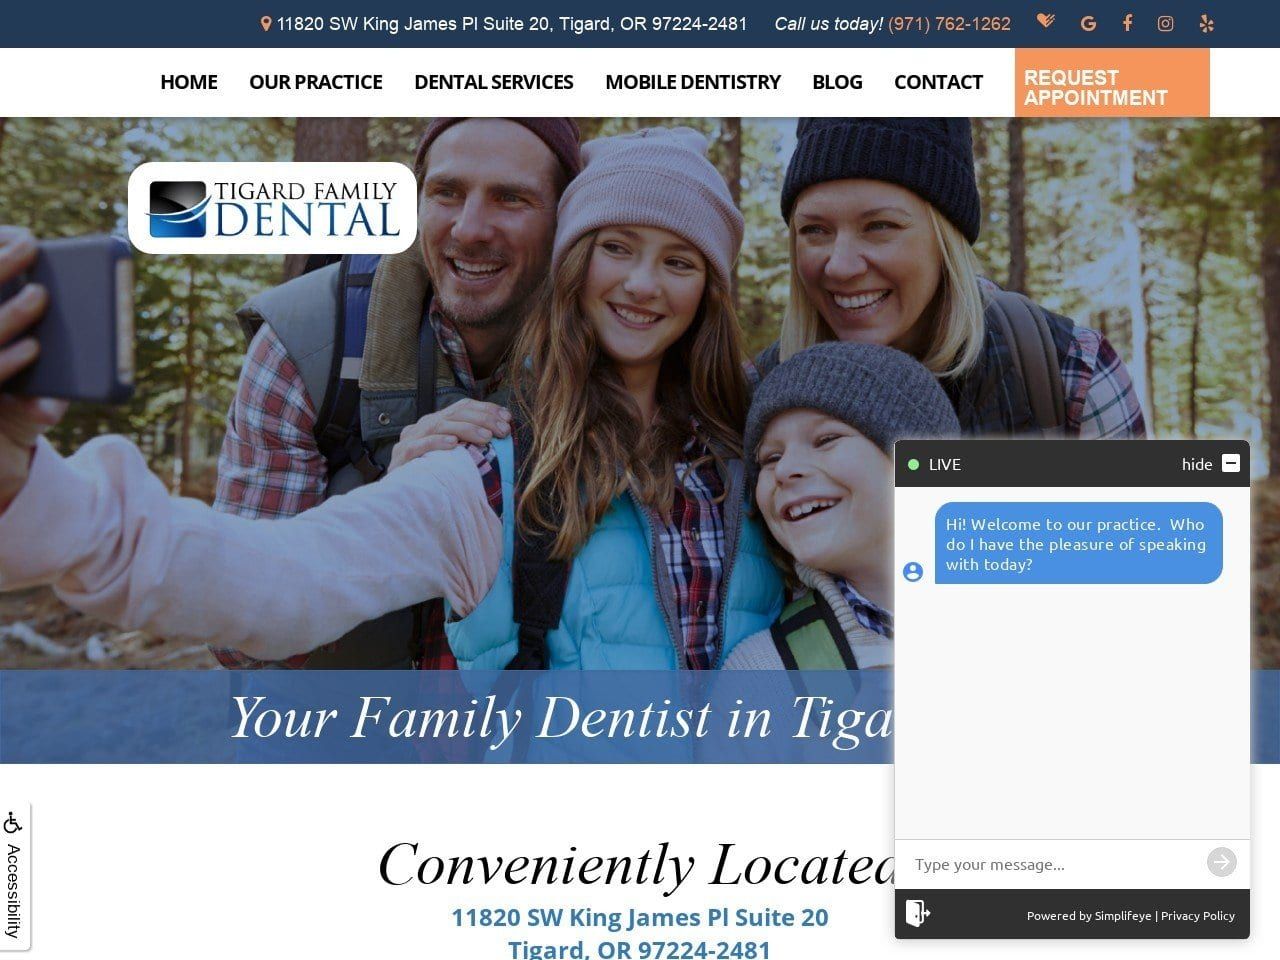 Tigard Family Dental Website Screenshot from tigardfamilydental.com